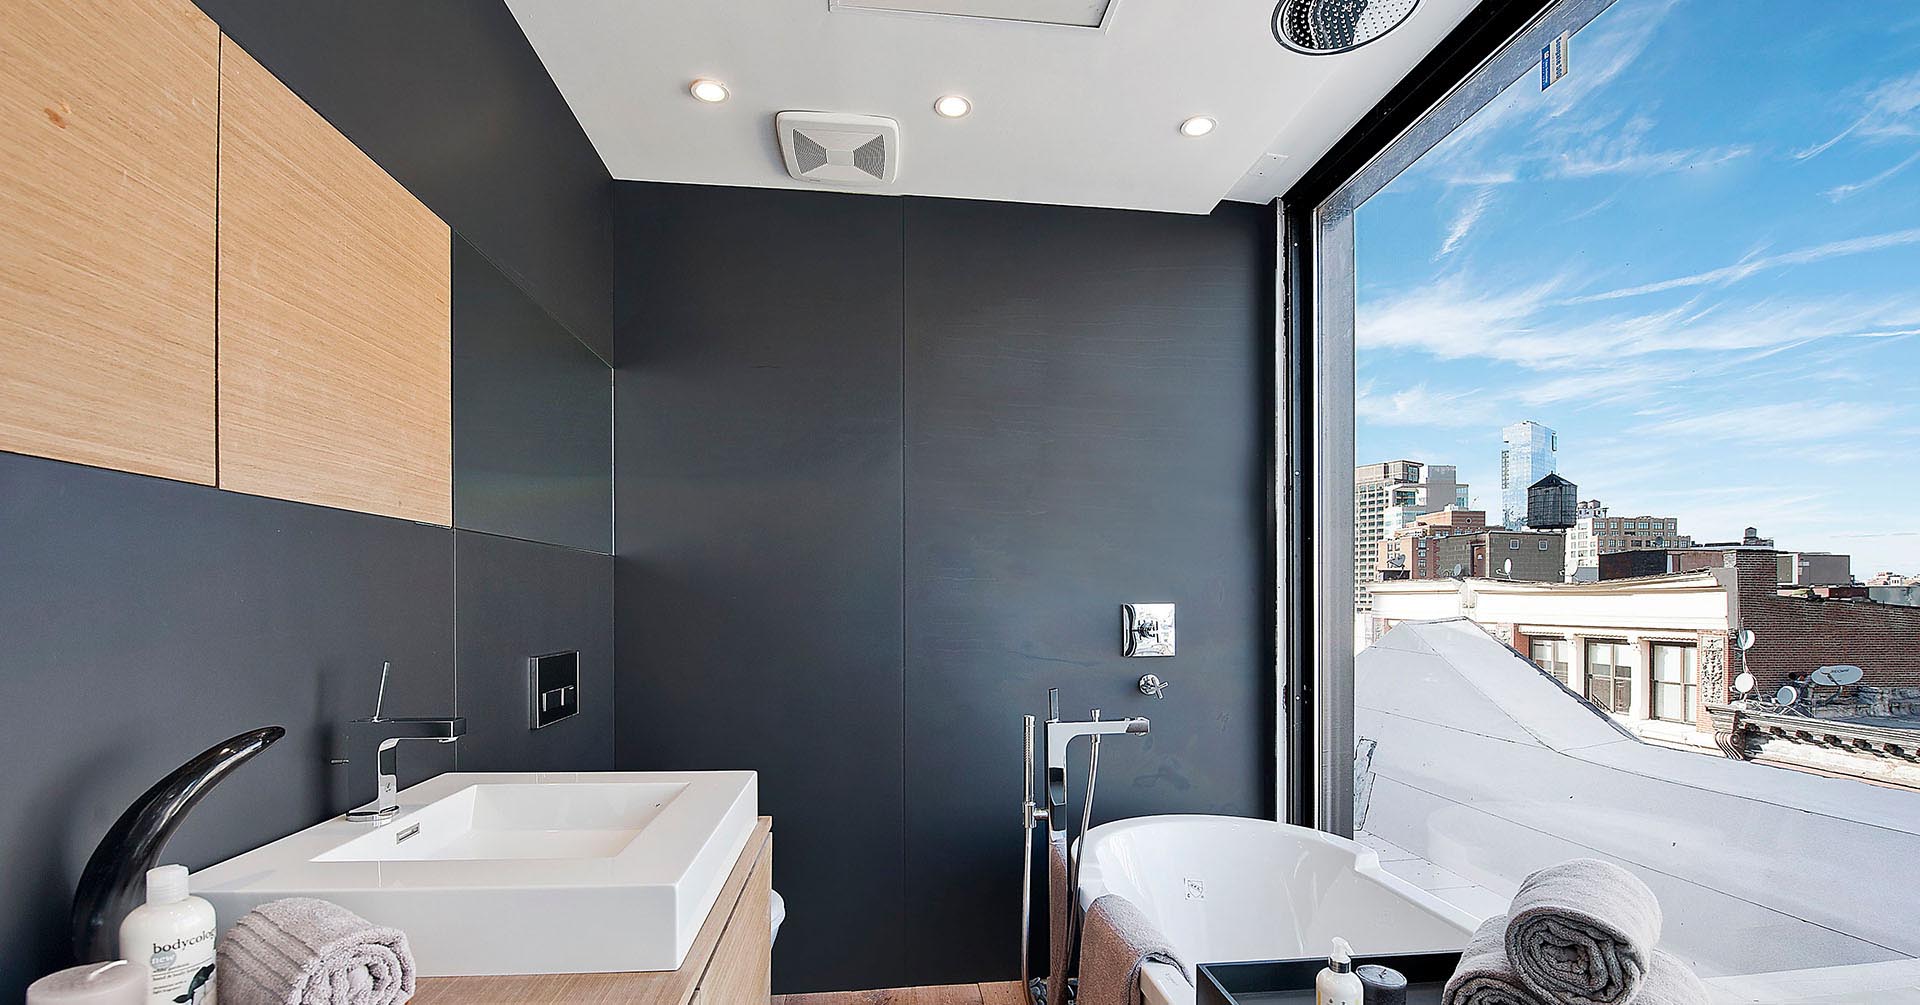 Tribeca bathroom renovation by Sguera Architecture PLLC, Leo Sguera architect Manhattan.